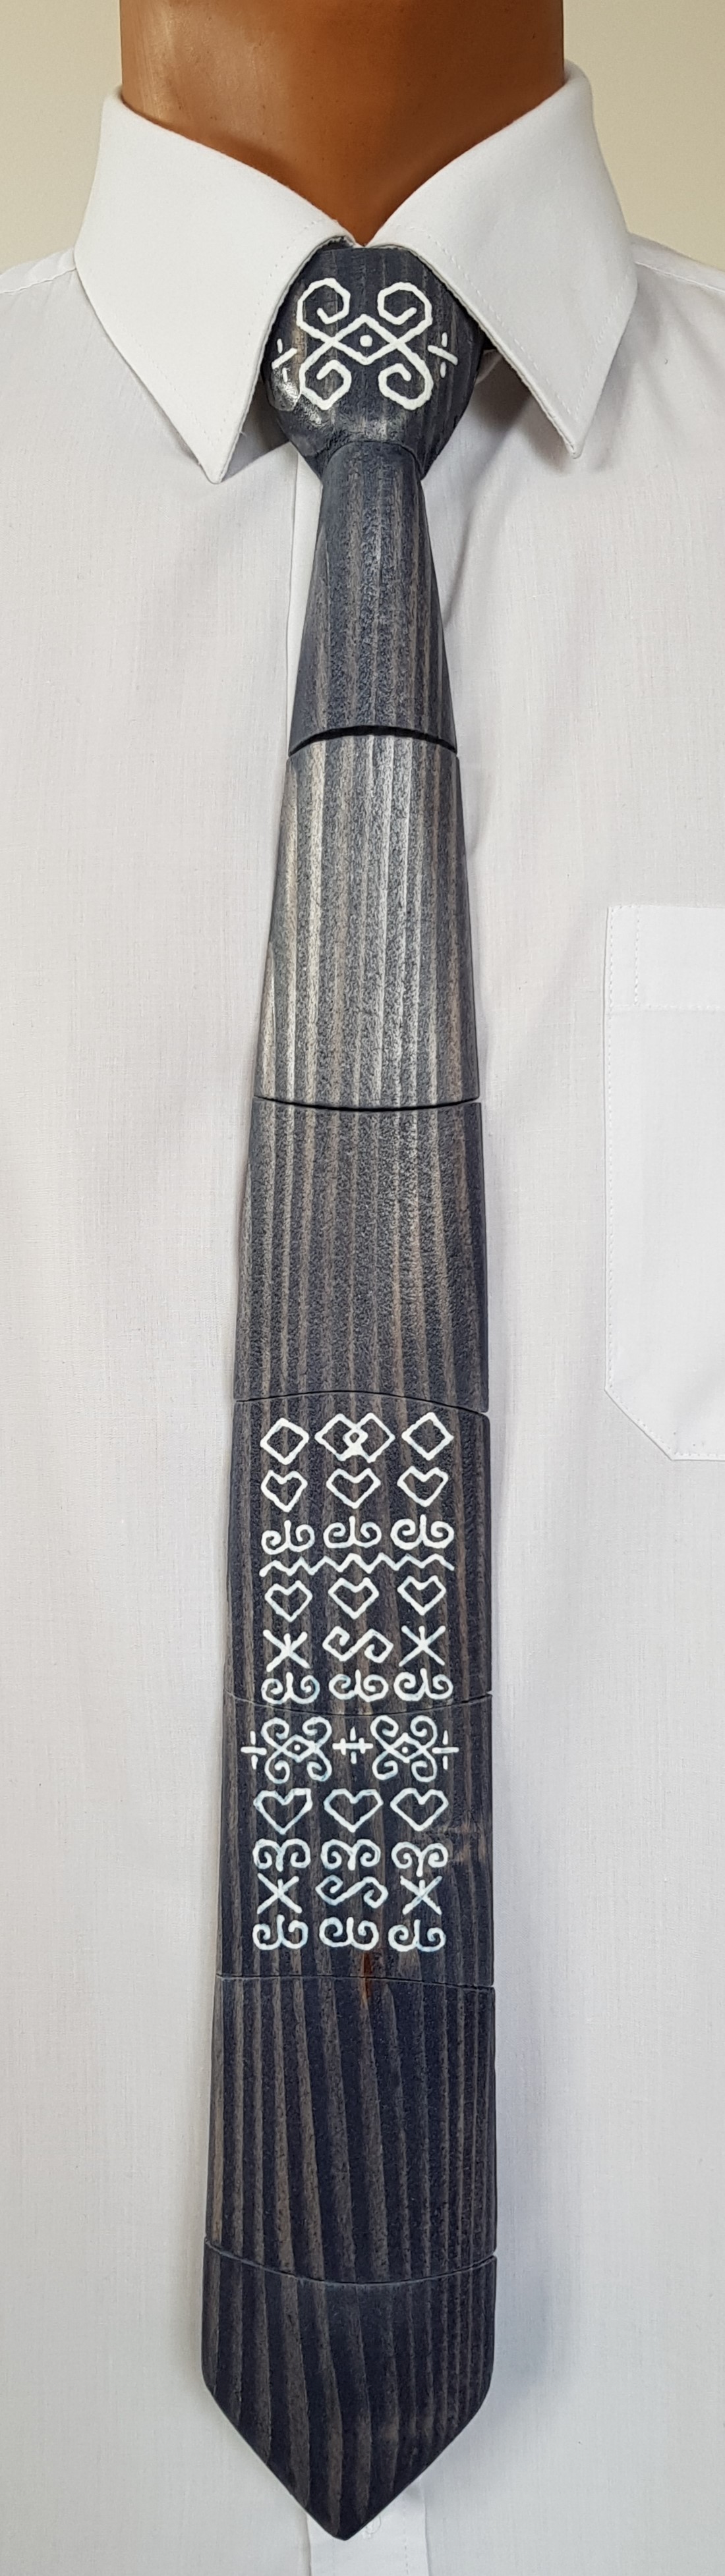 Drevená kravata 018